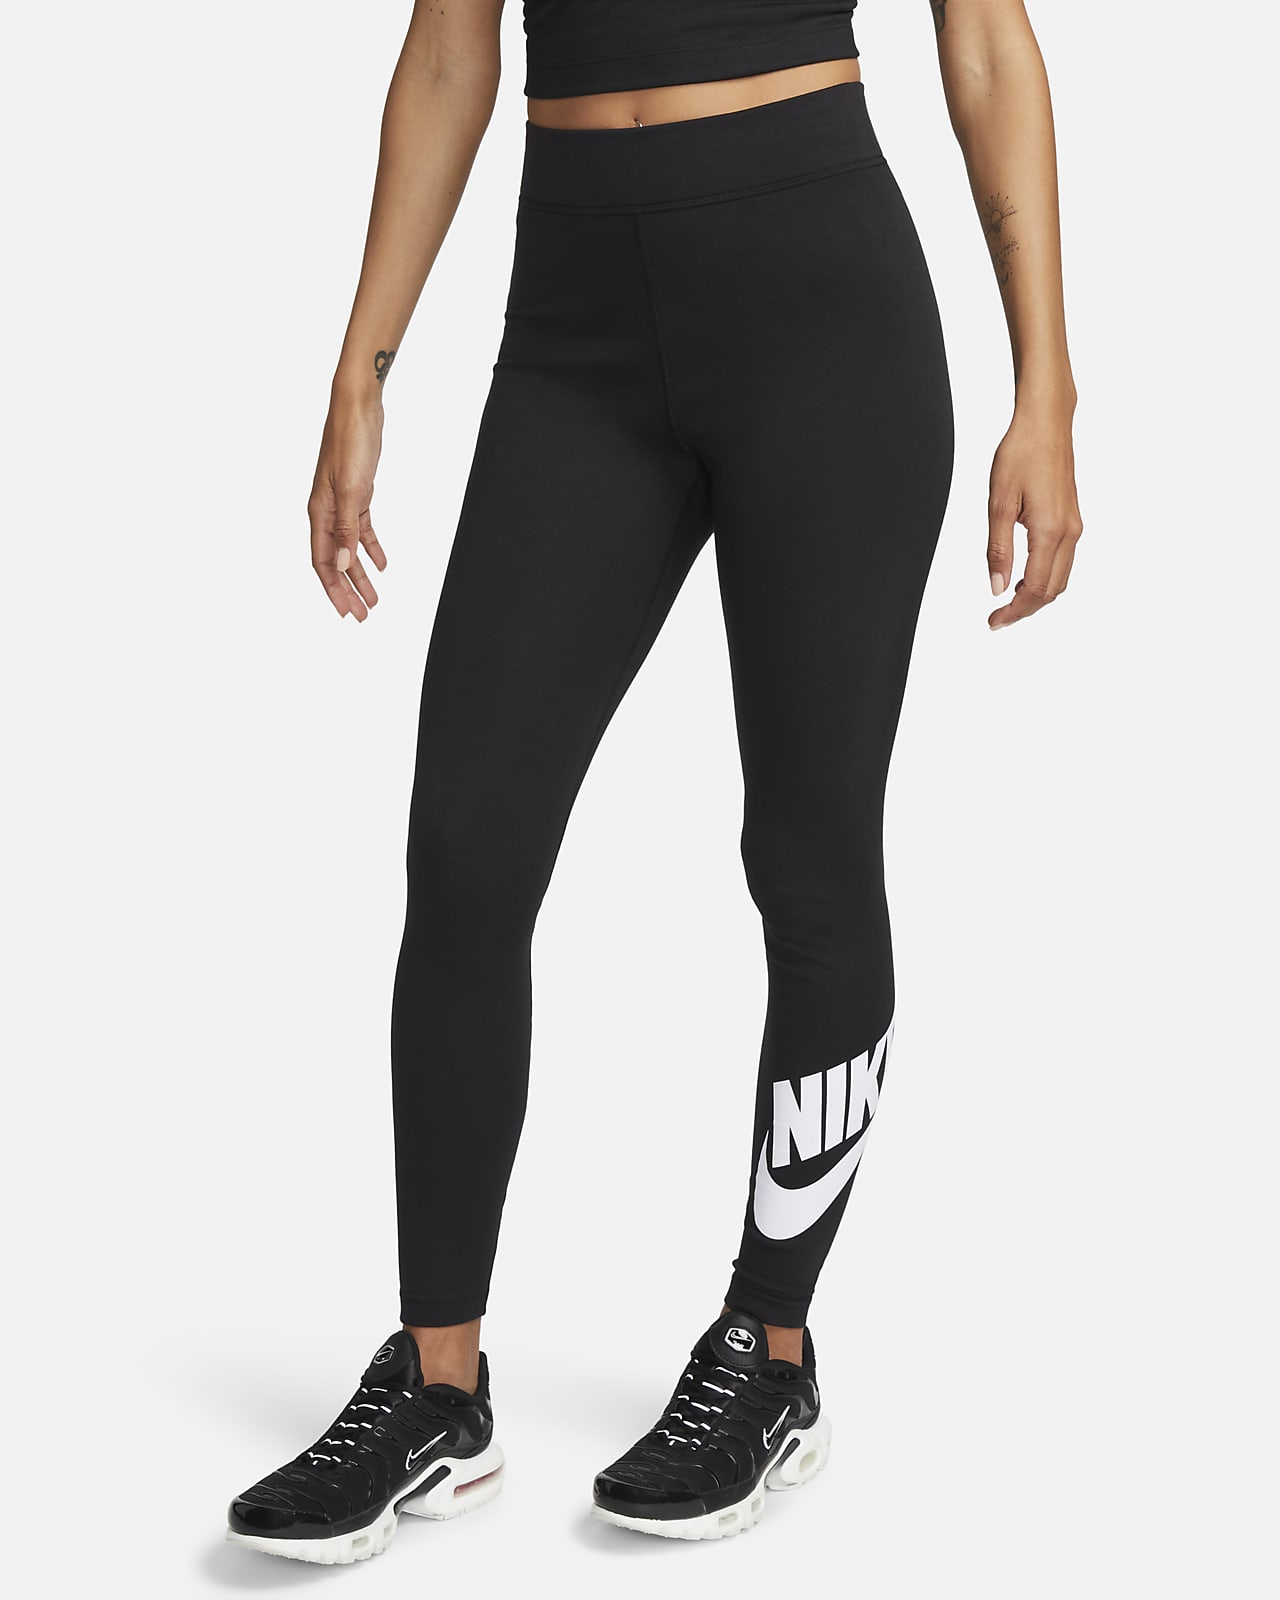 Nike Sportswear Classics magas derekú, mintás női leggings. Nike HU